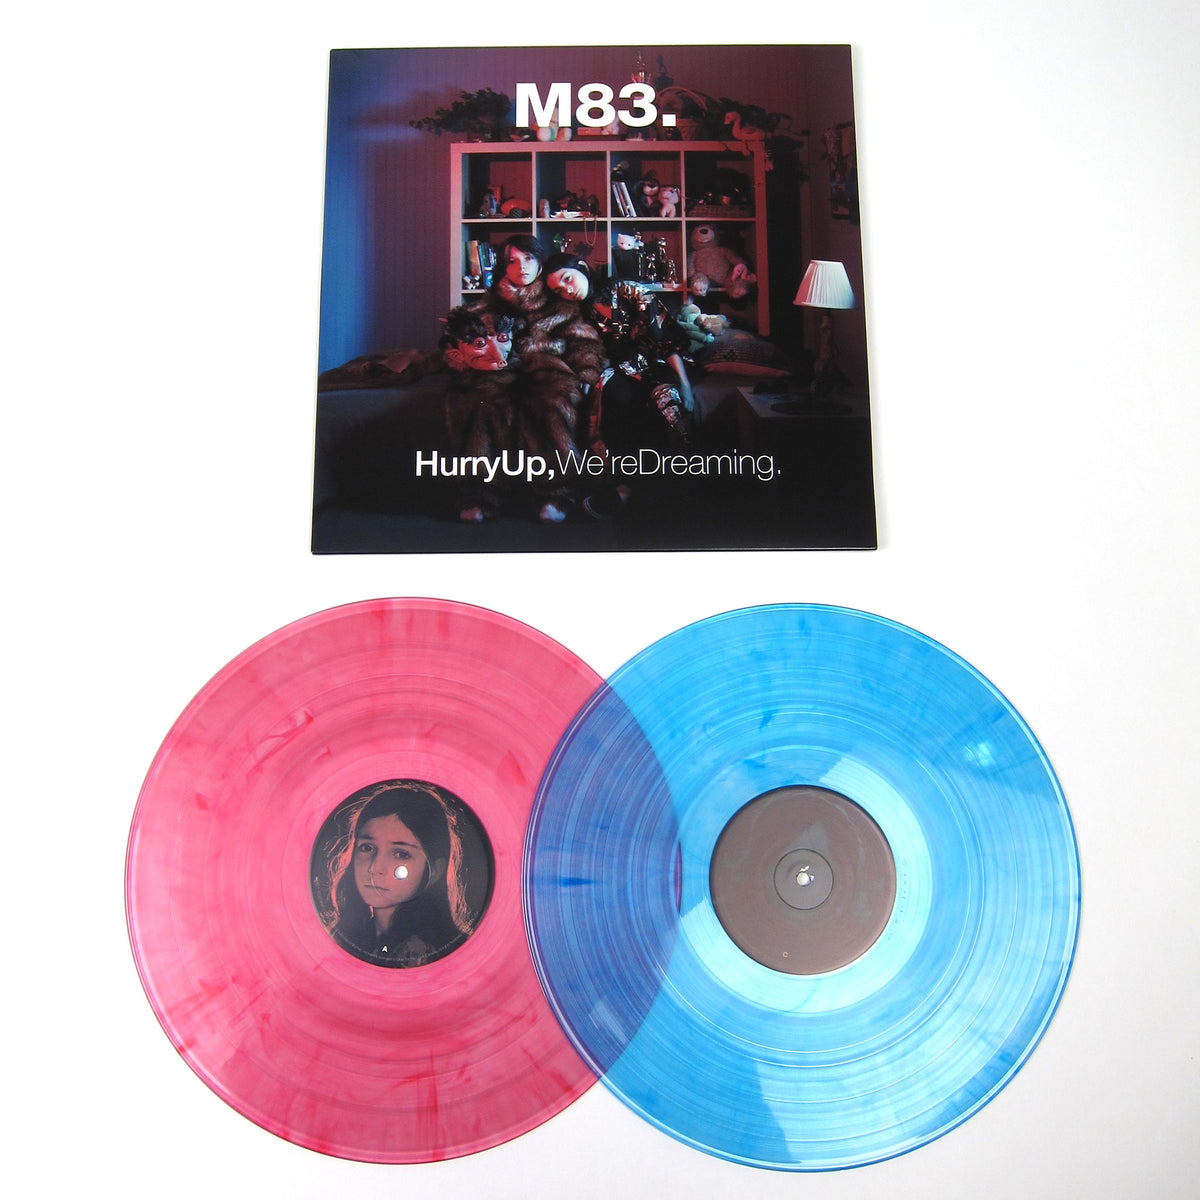 m83 hurry up were dreaming vinyl digital